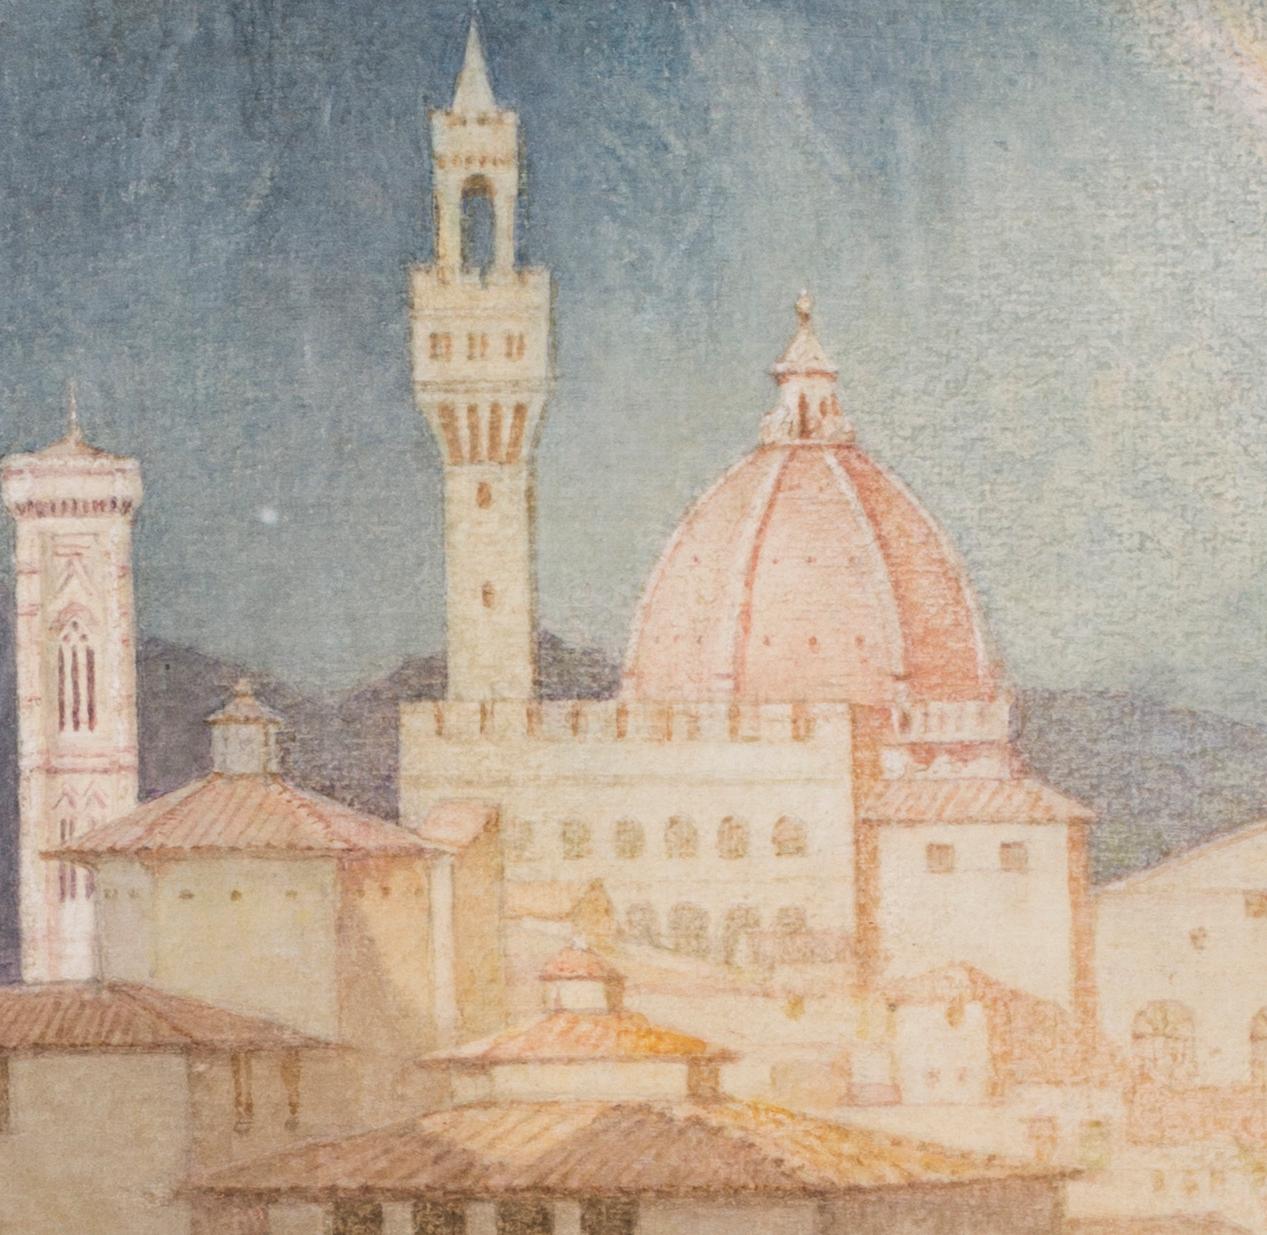 Siena and Florence, Italy by 20th Century British artist Allcott - Gray Landscape Art by Walter H. Allcott